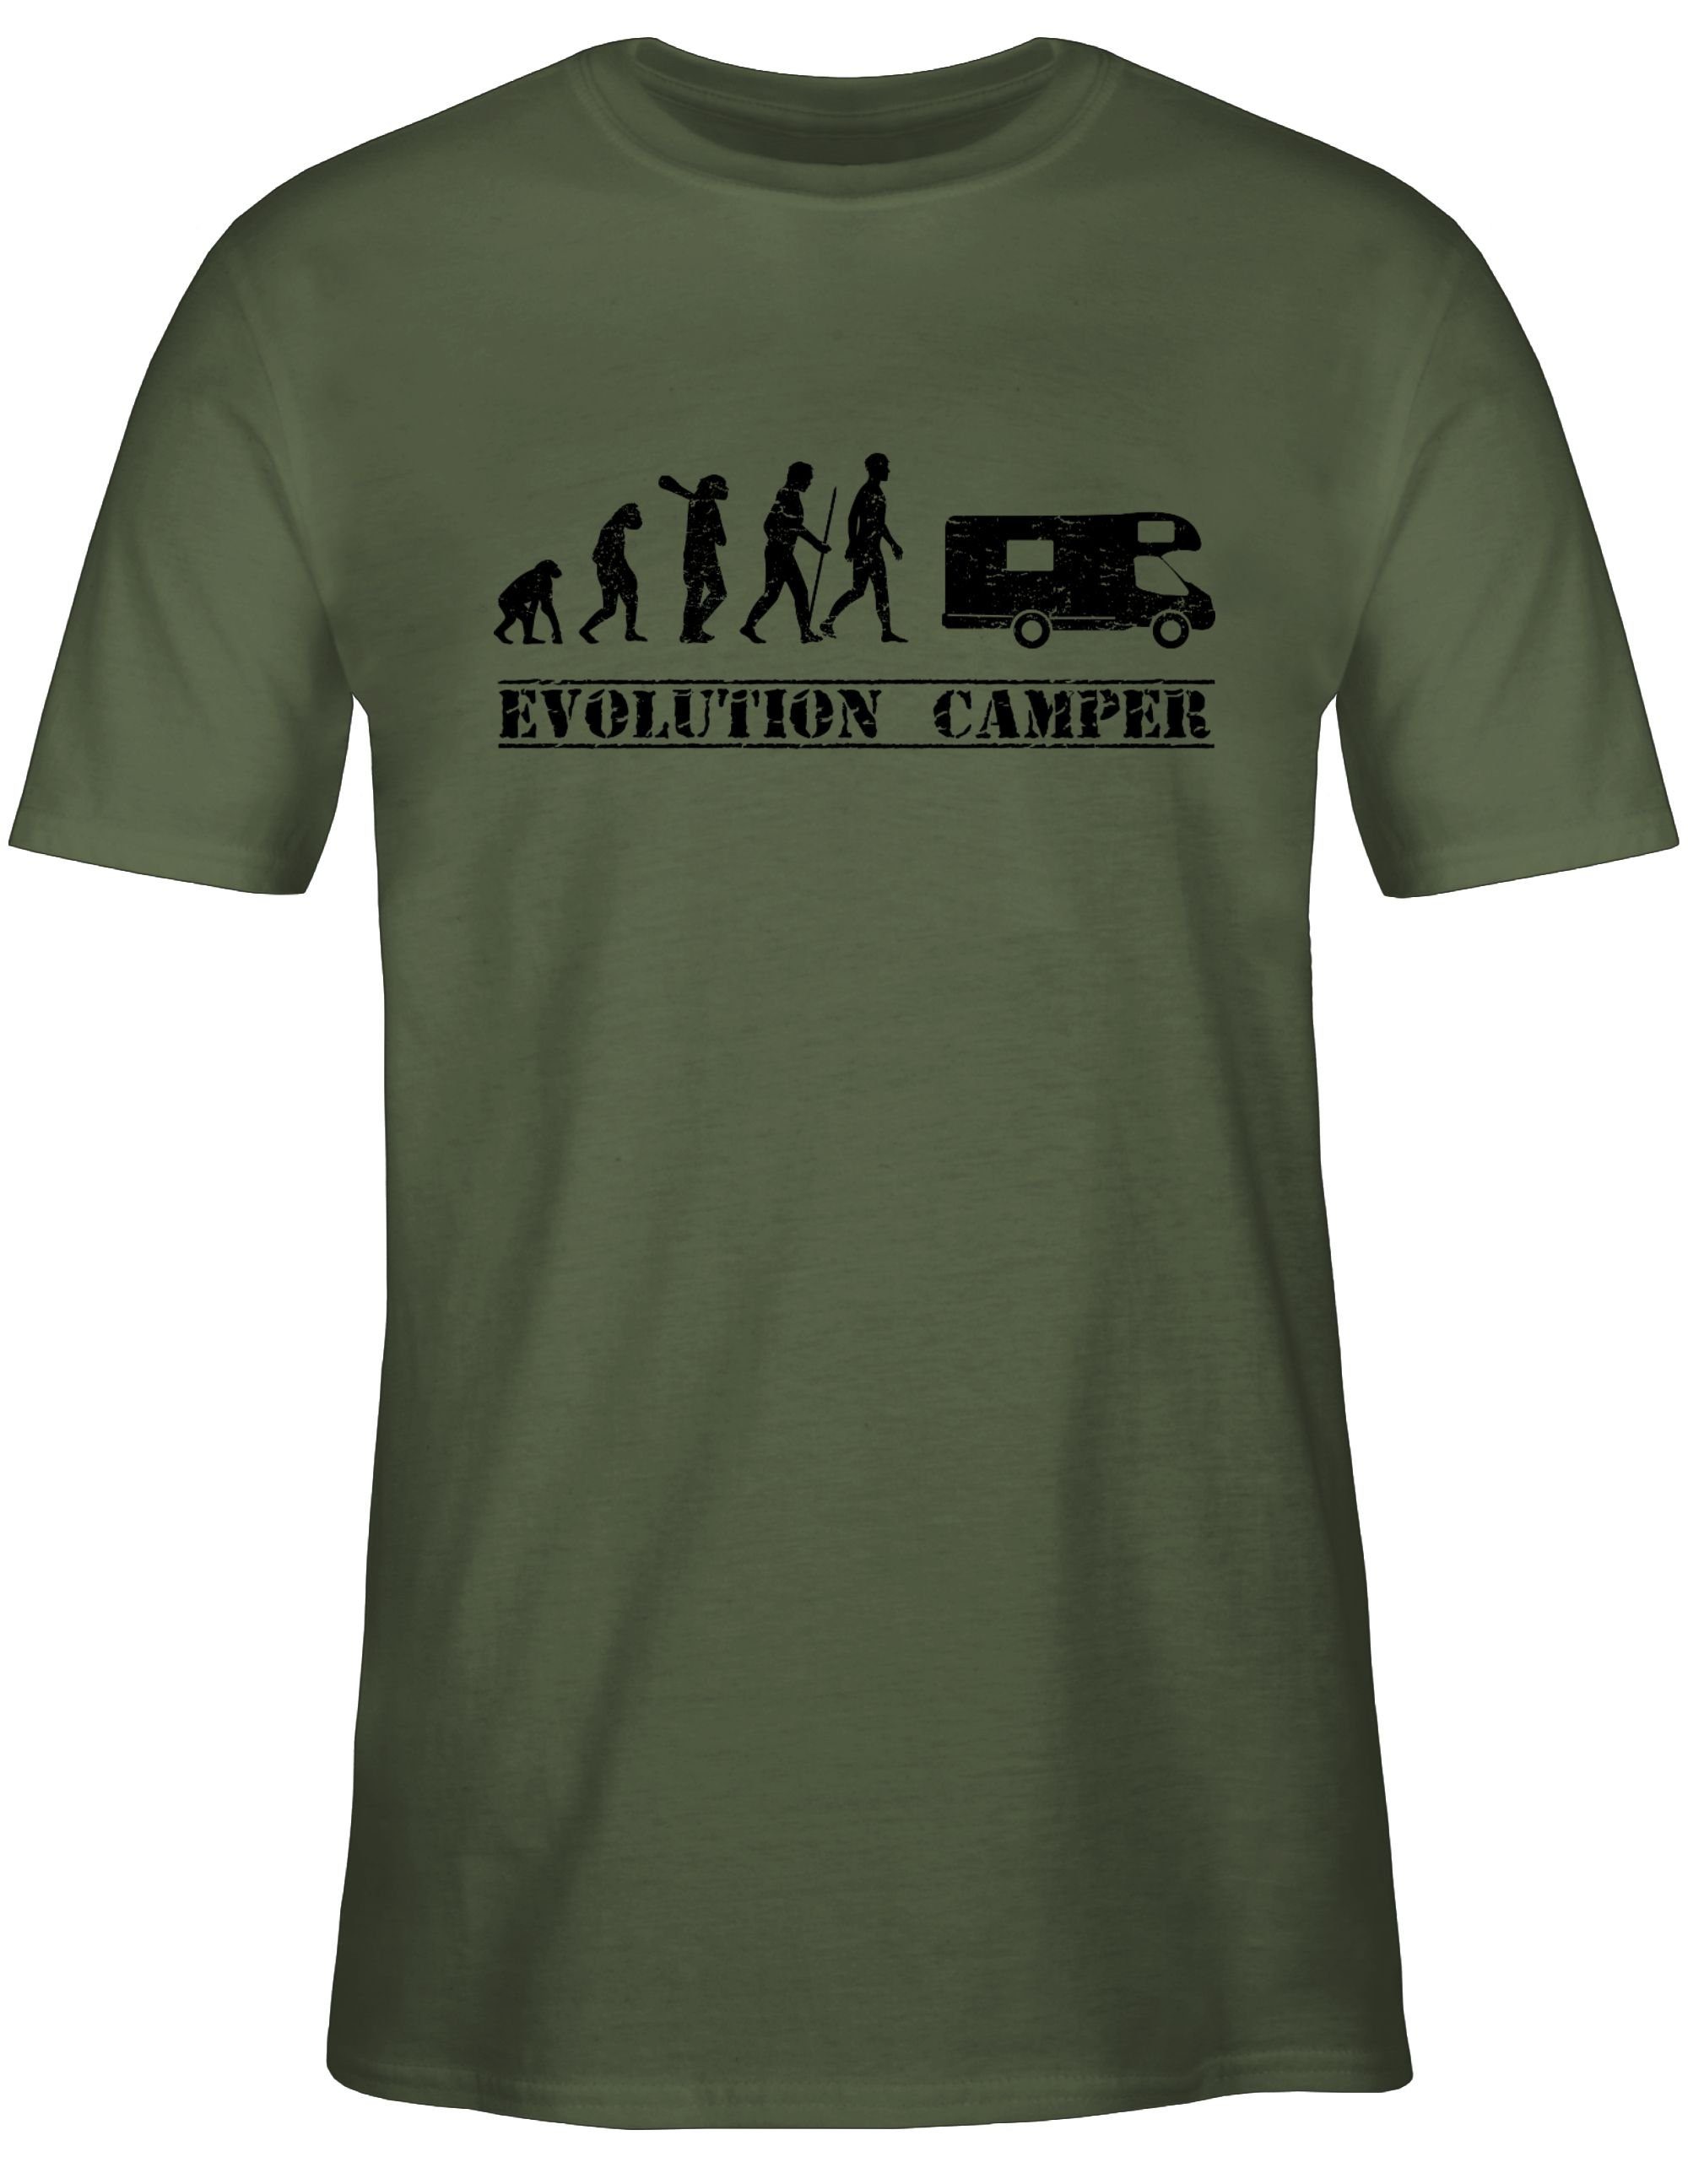 Shirtracer T-Shirt Outfit Evolution Army Grün 02 Camper Evolution